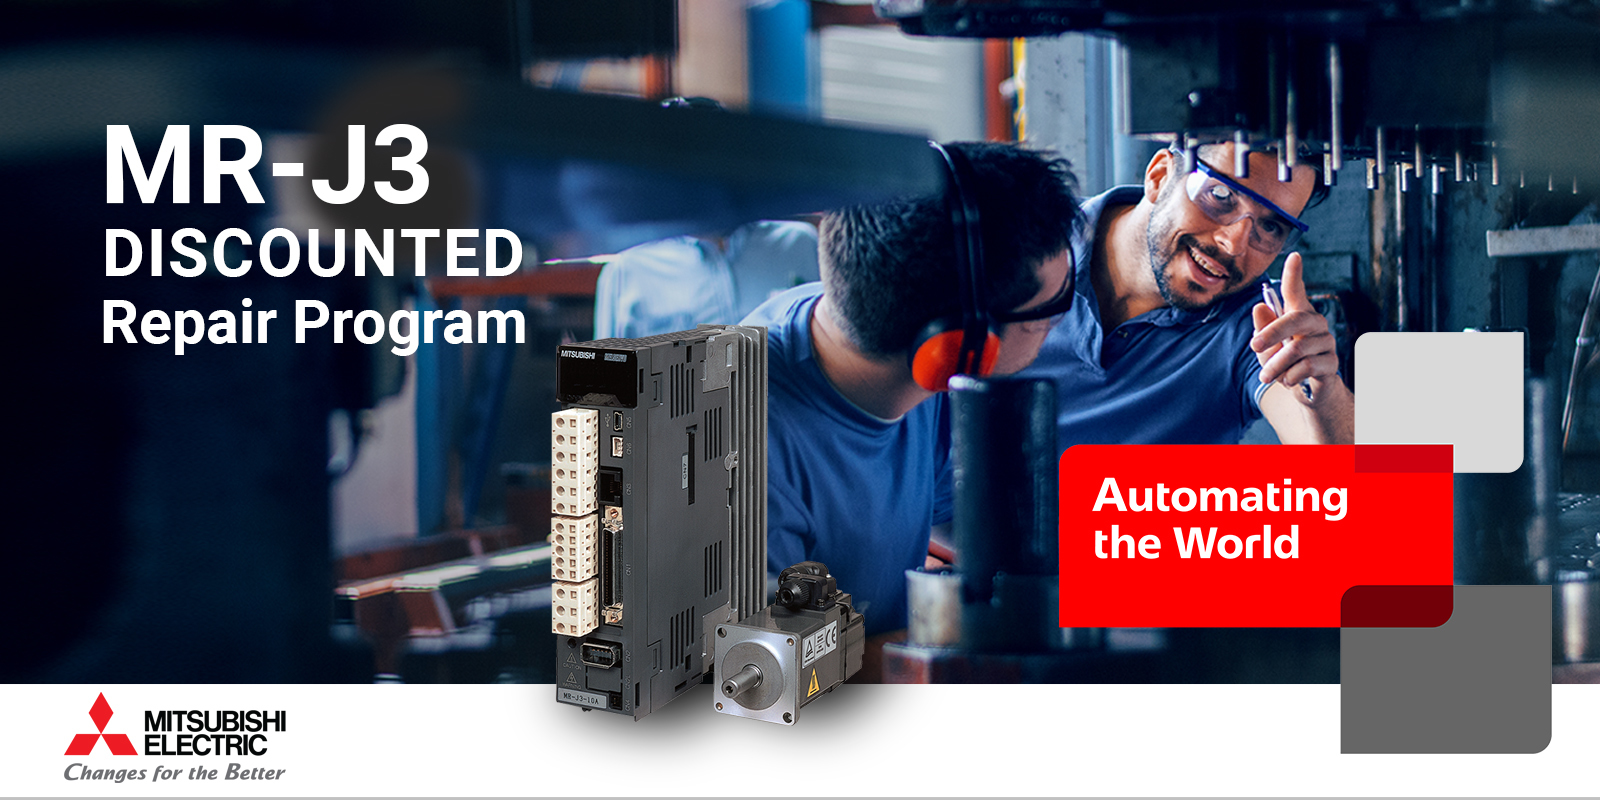 Discounted Repair Program for MR-J3 Servo Amplifiers | Mitsubishi Electric  Americas Factory Automation Solutions| Mitsubishi Electric Americas Factory  Automation Solutions